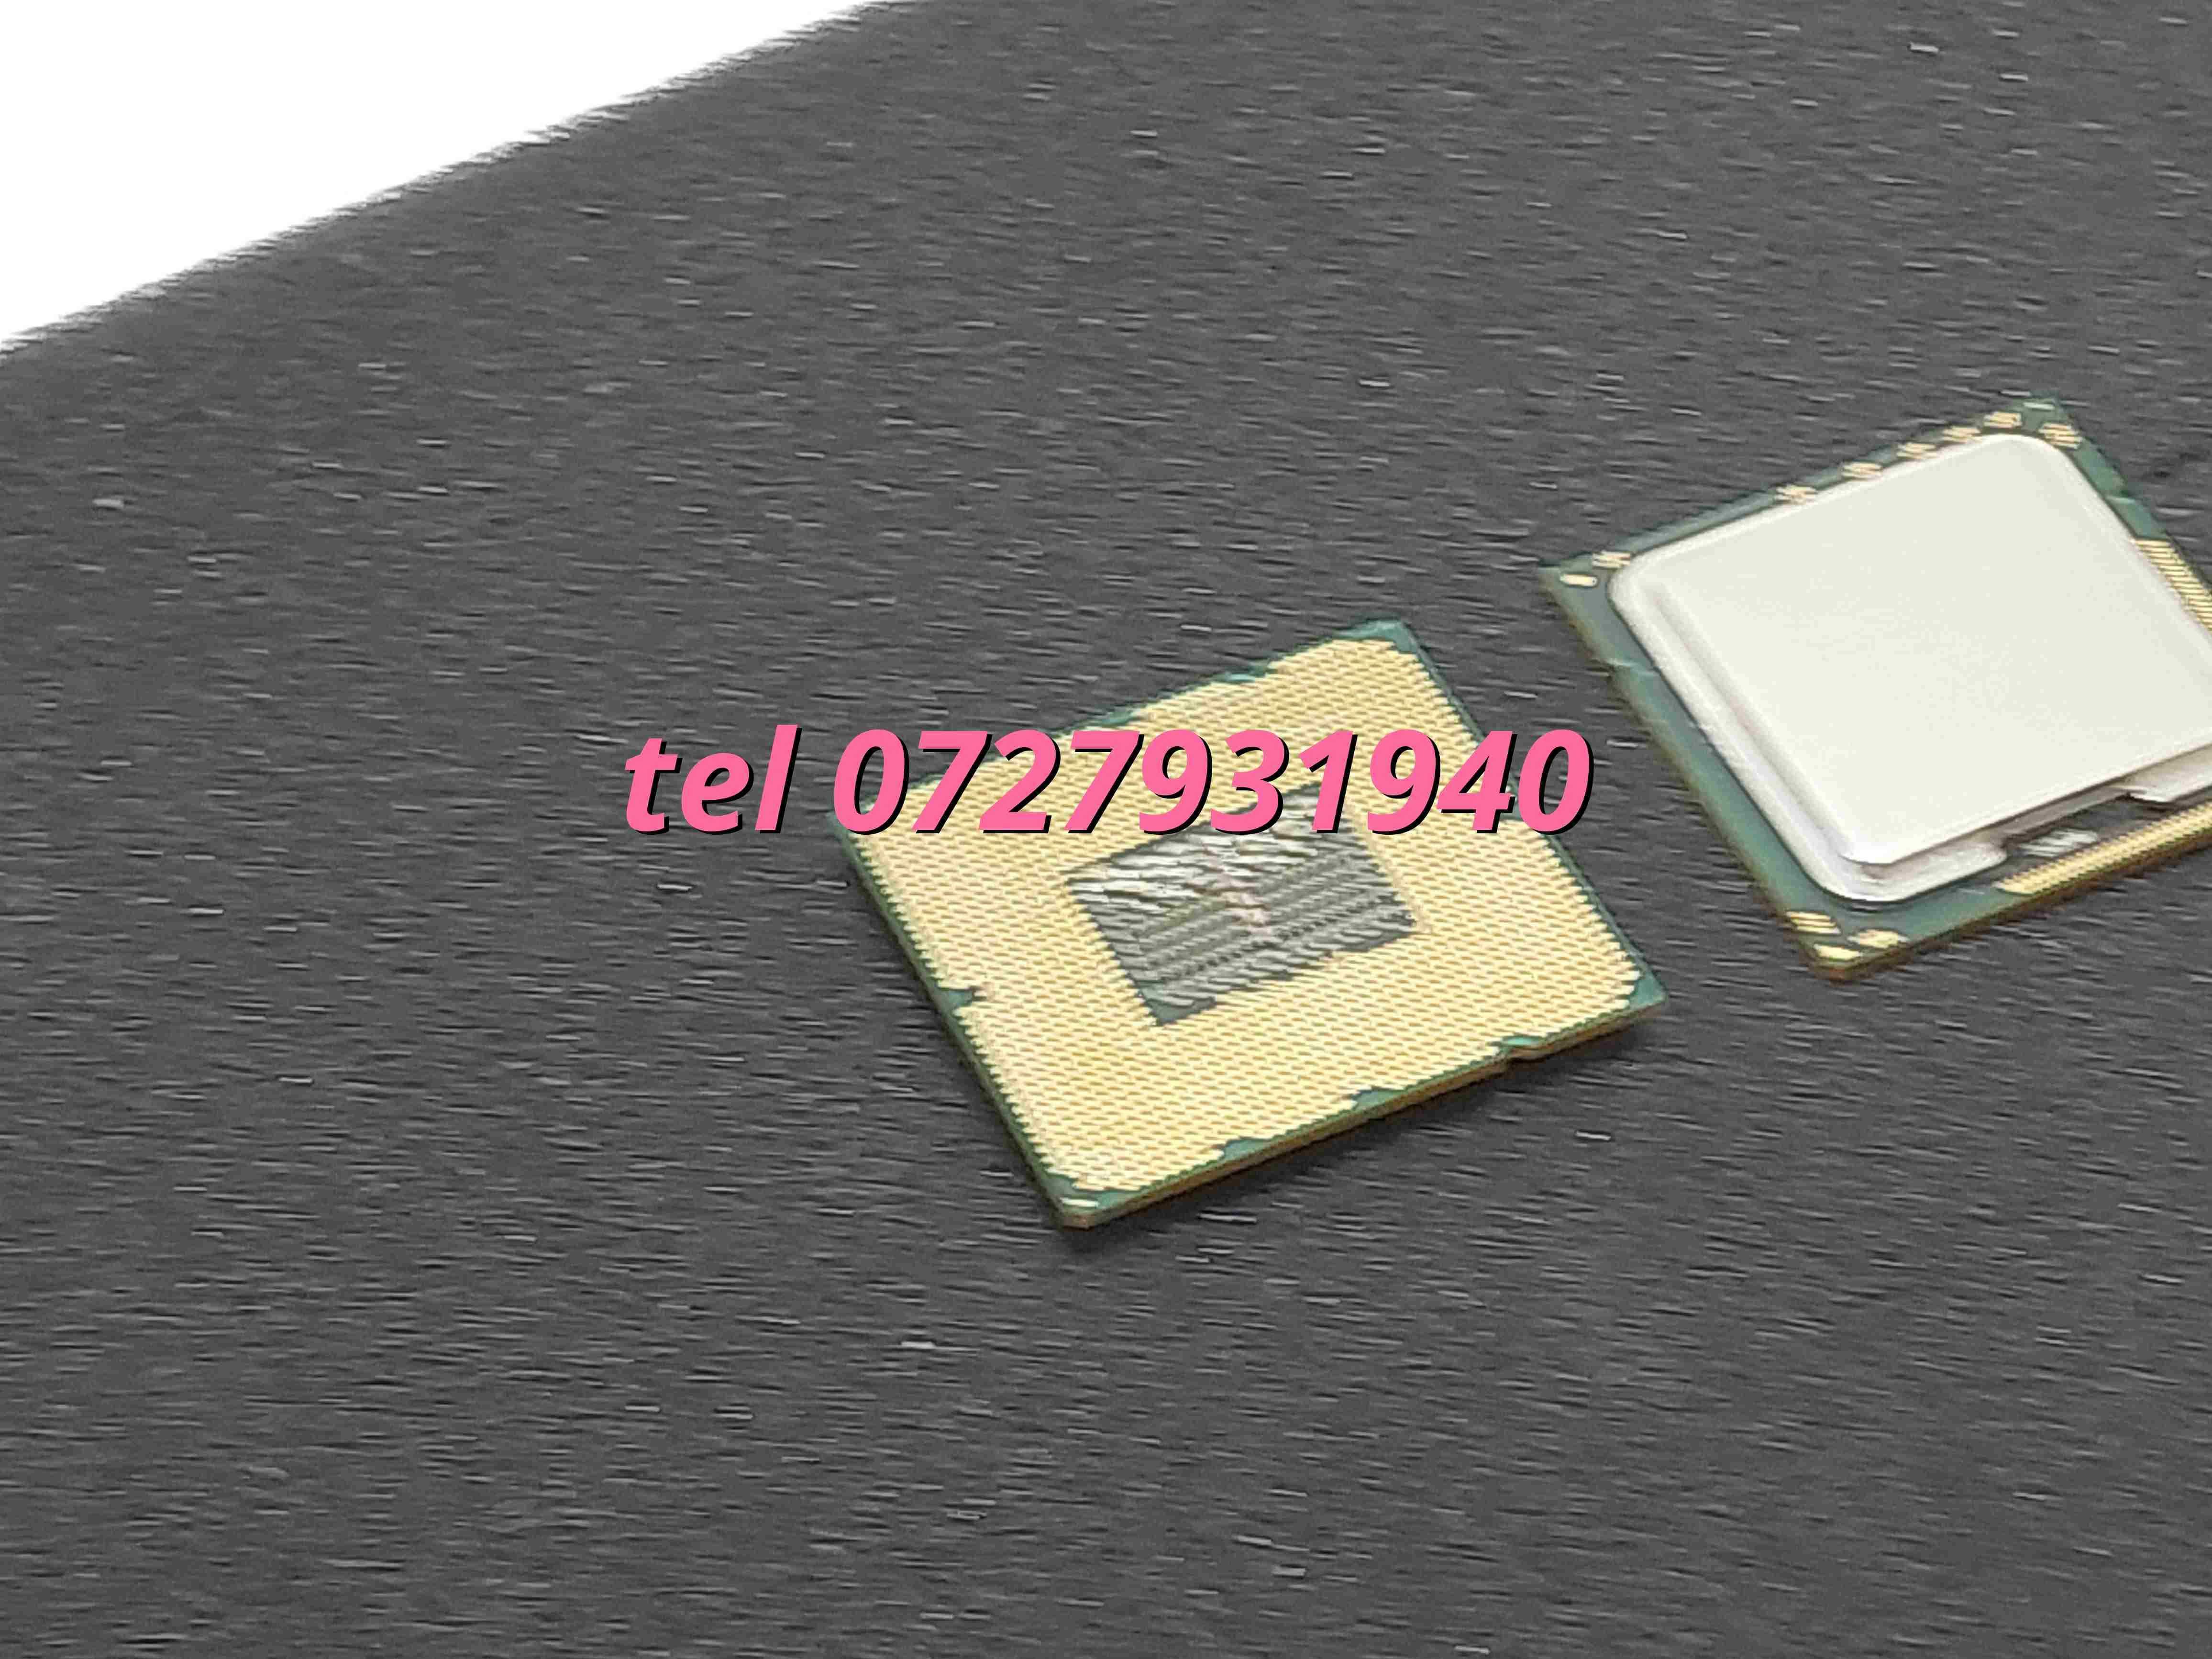 Procesor Core Intel I7 920 266ghz Socket 1366